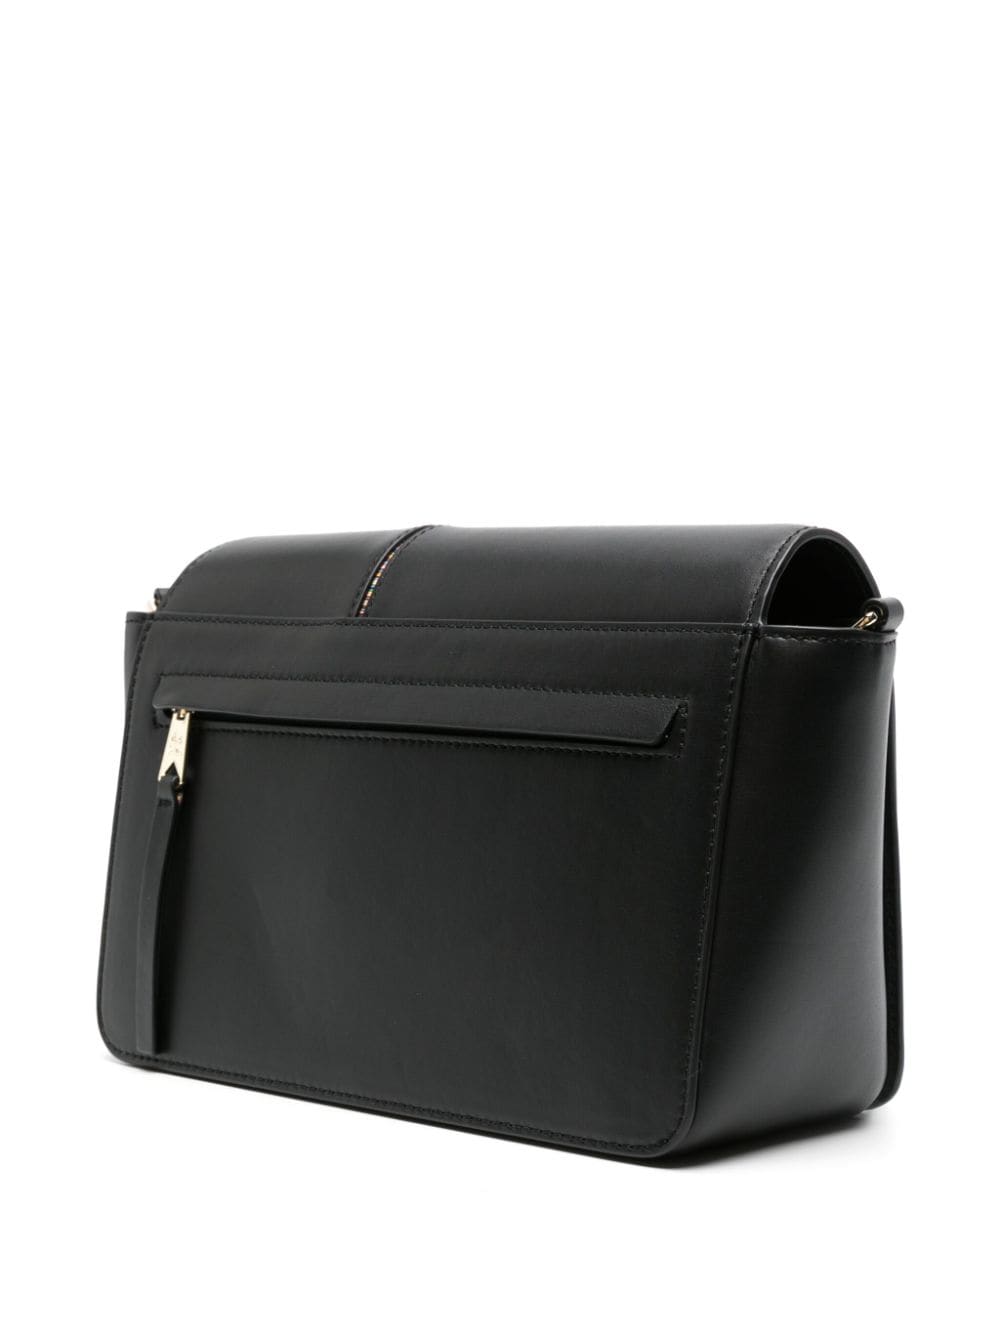 PAUL SMITH Designer Signature Stripe Leather Crossbody Bag for Women